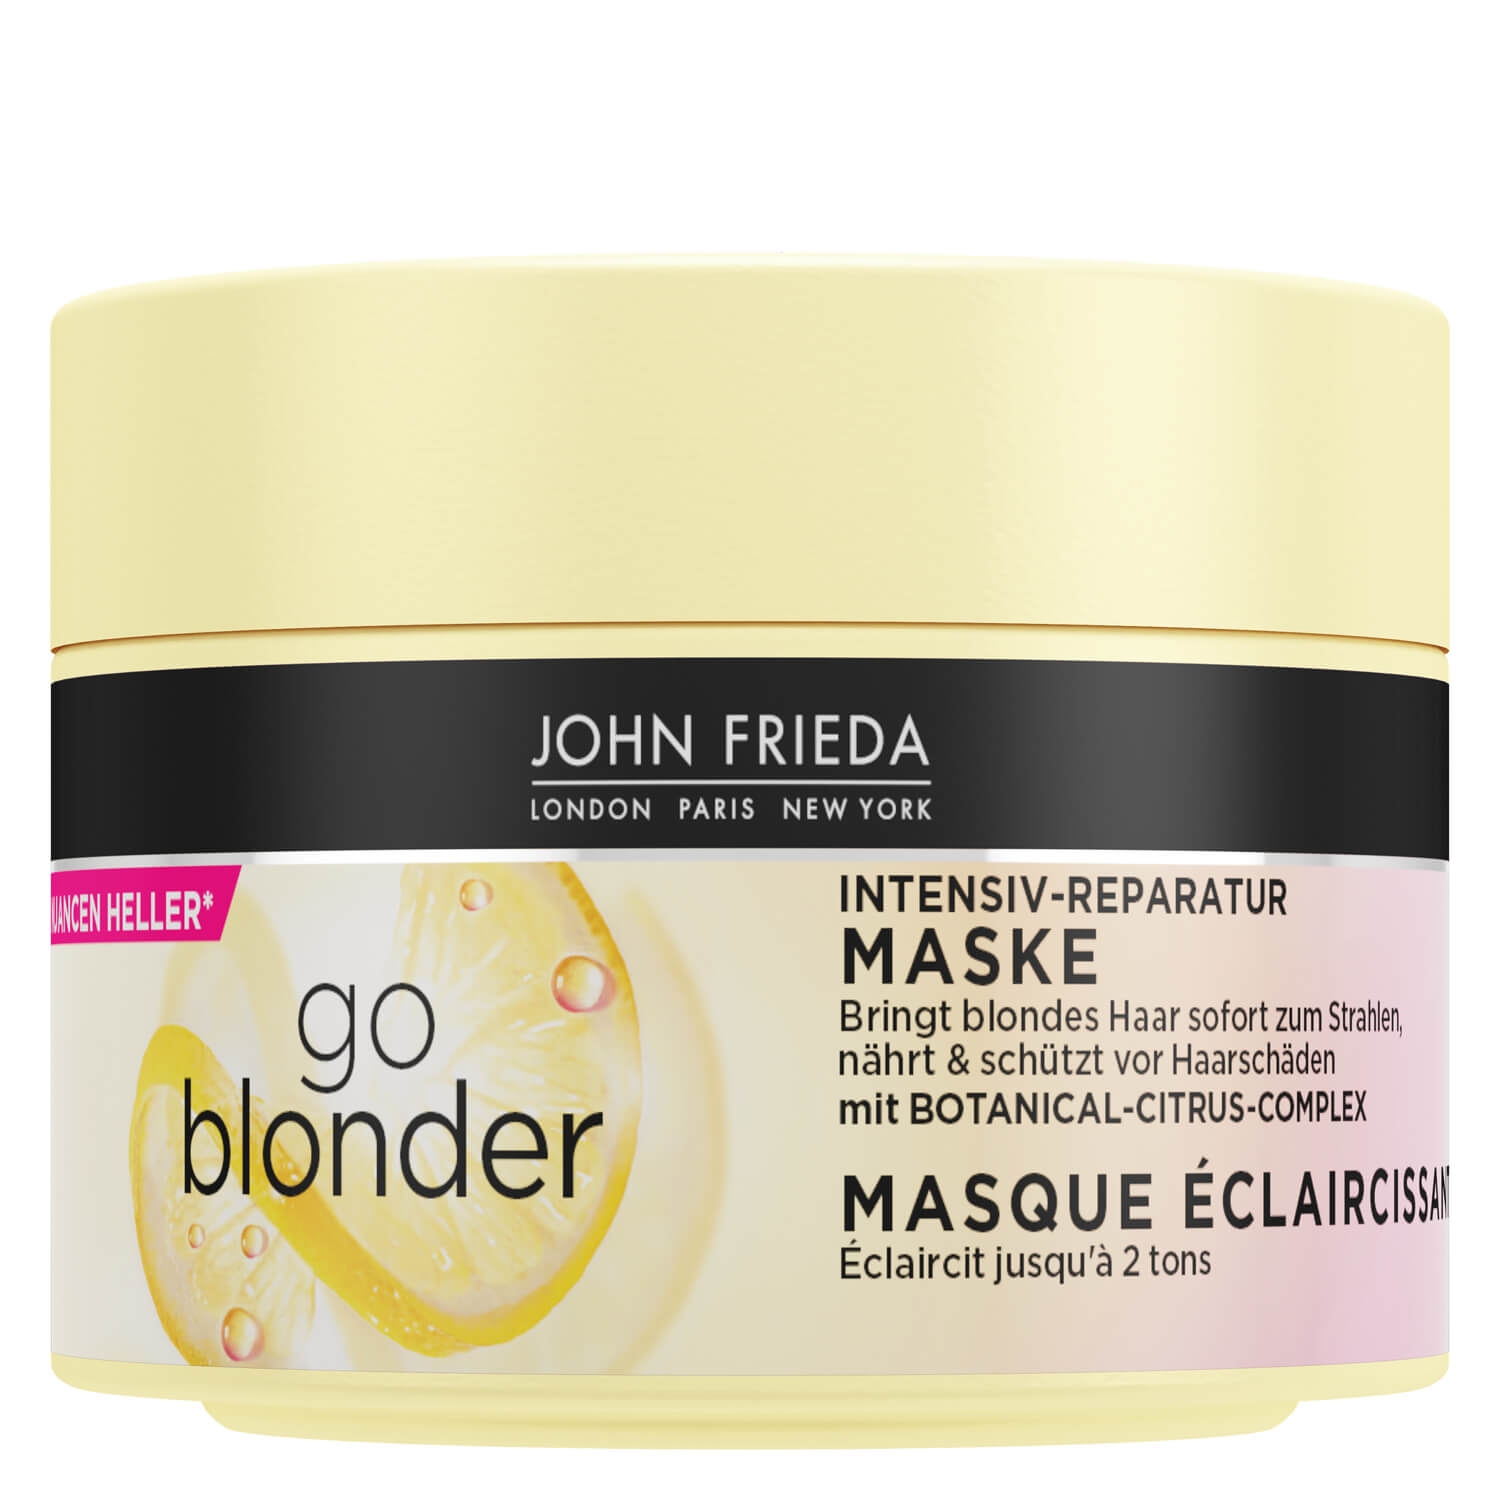 Product image from Sheer Blonde - Go Blonder Intensiv Reparatur-Maske